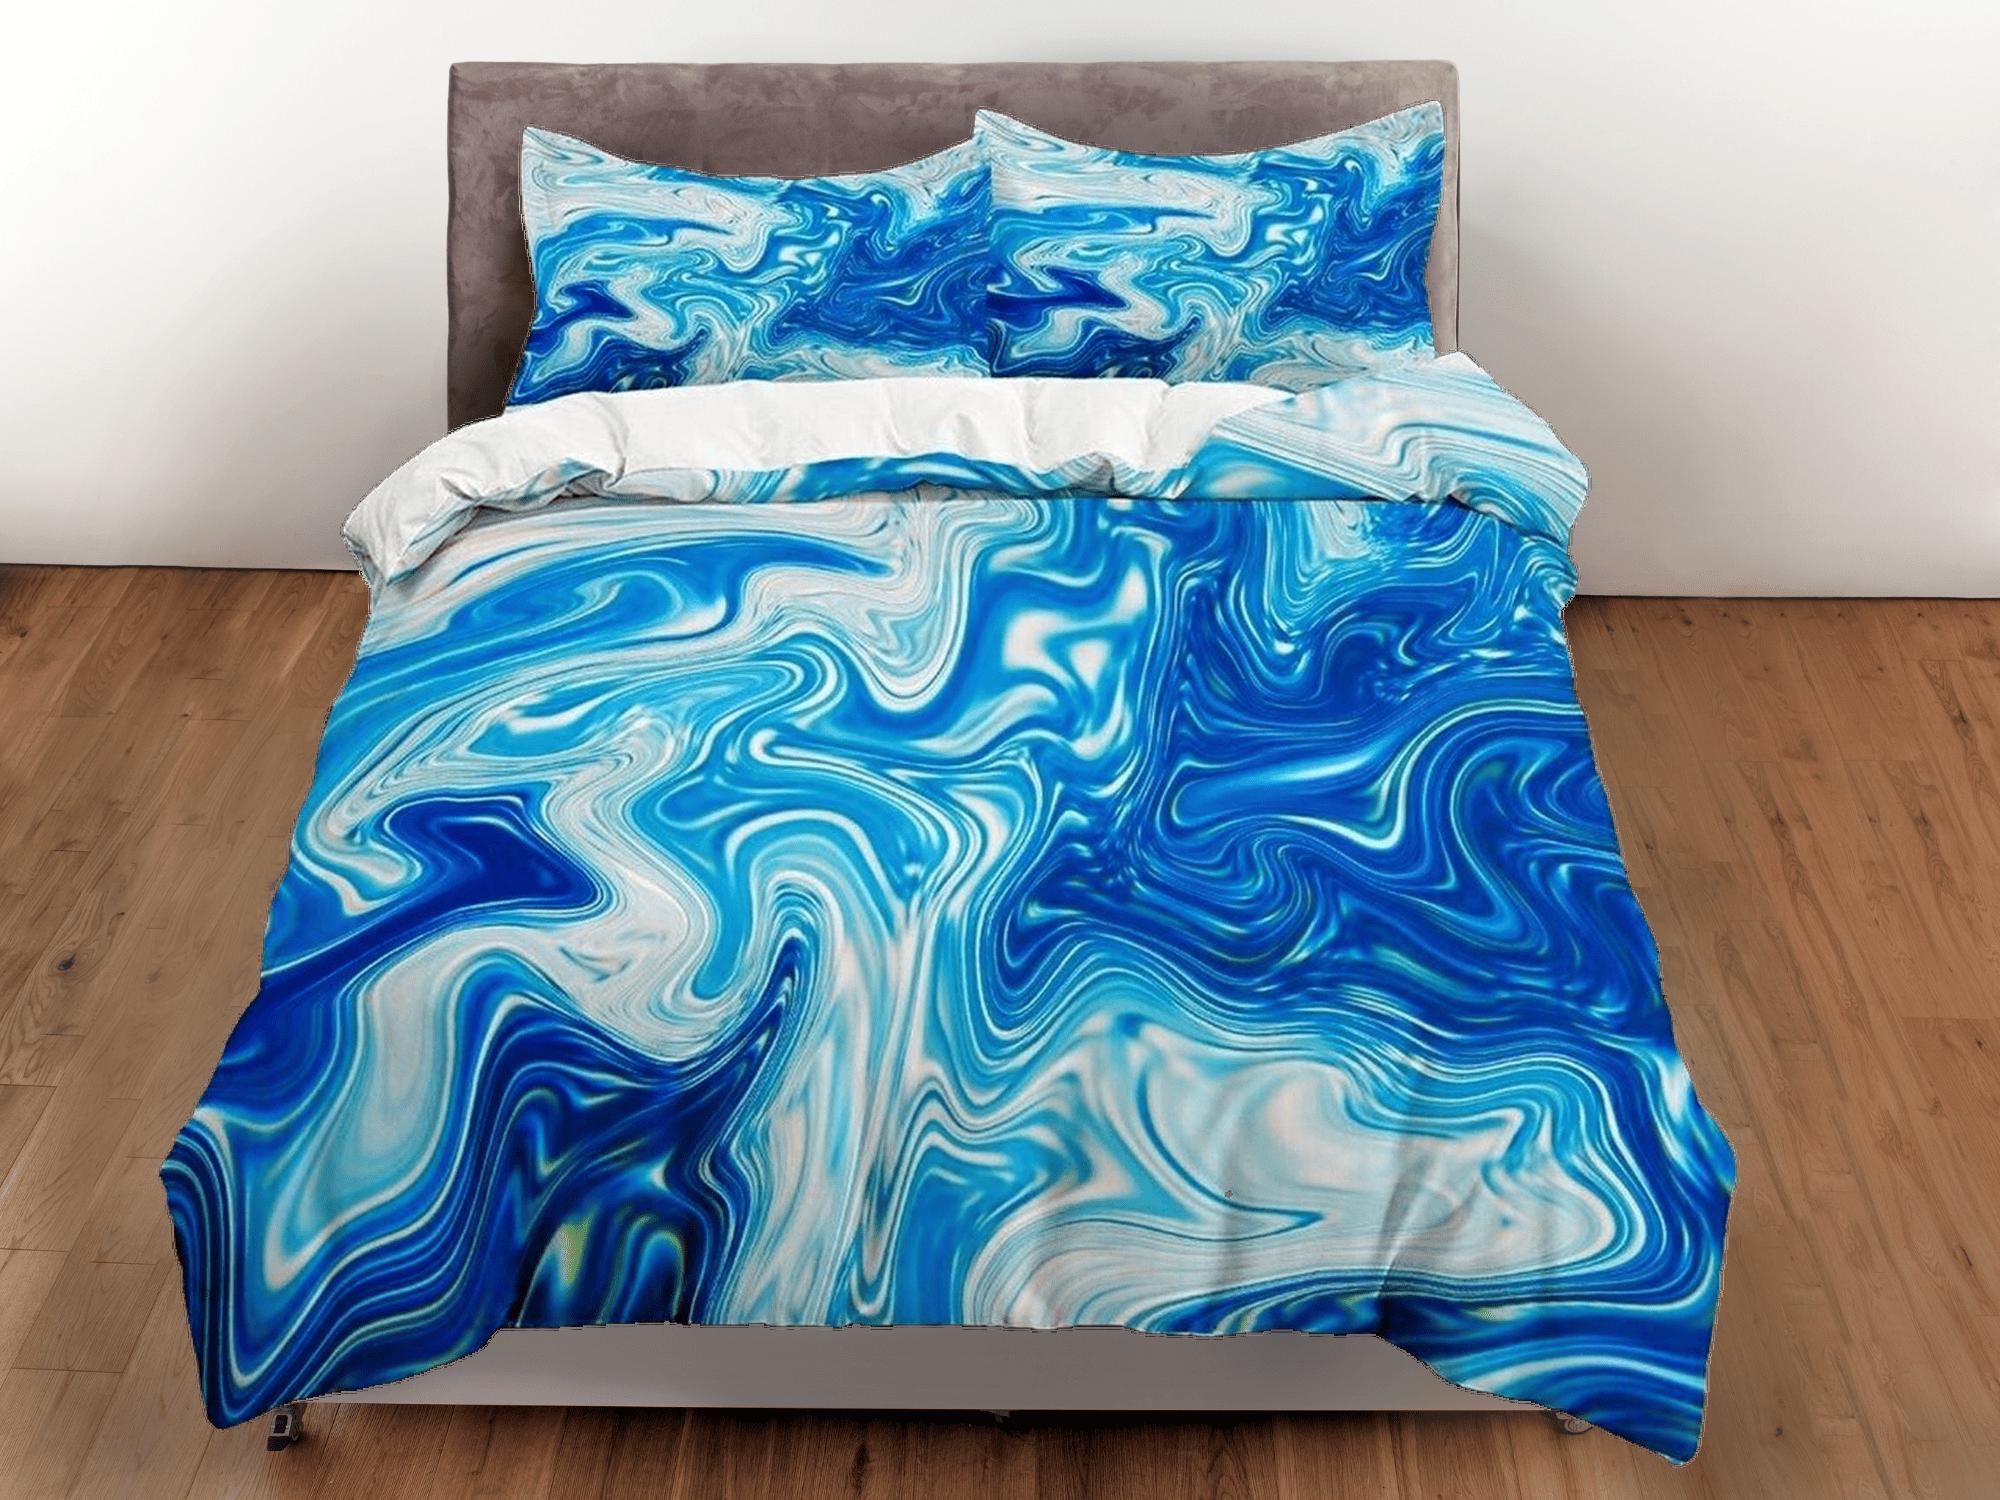 daintyduvet Ocean waves marble blue bedding contemporary bedroom set aesthetic duvet cover abstract art room decor boho chic bedding set full king queen